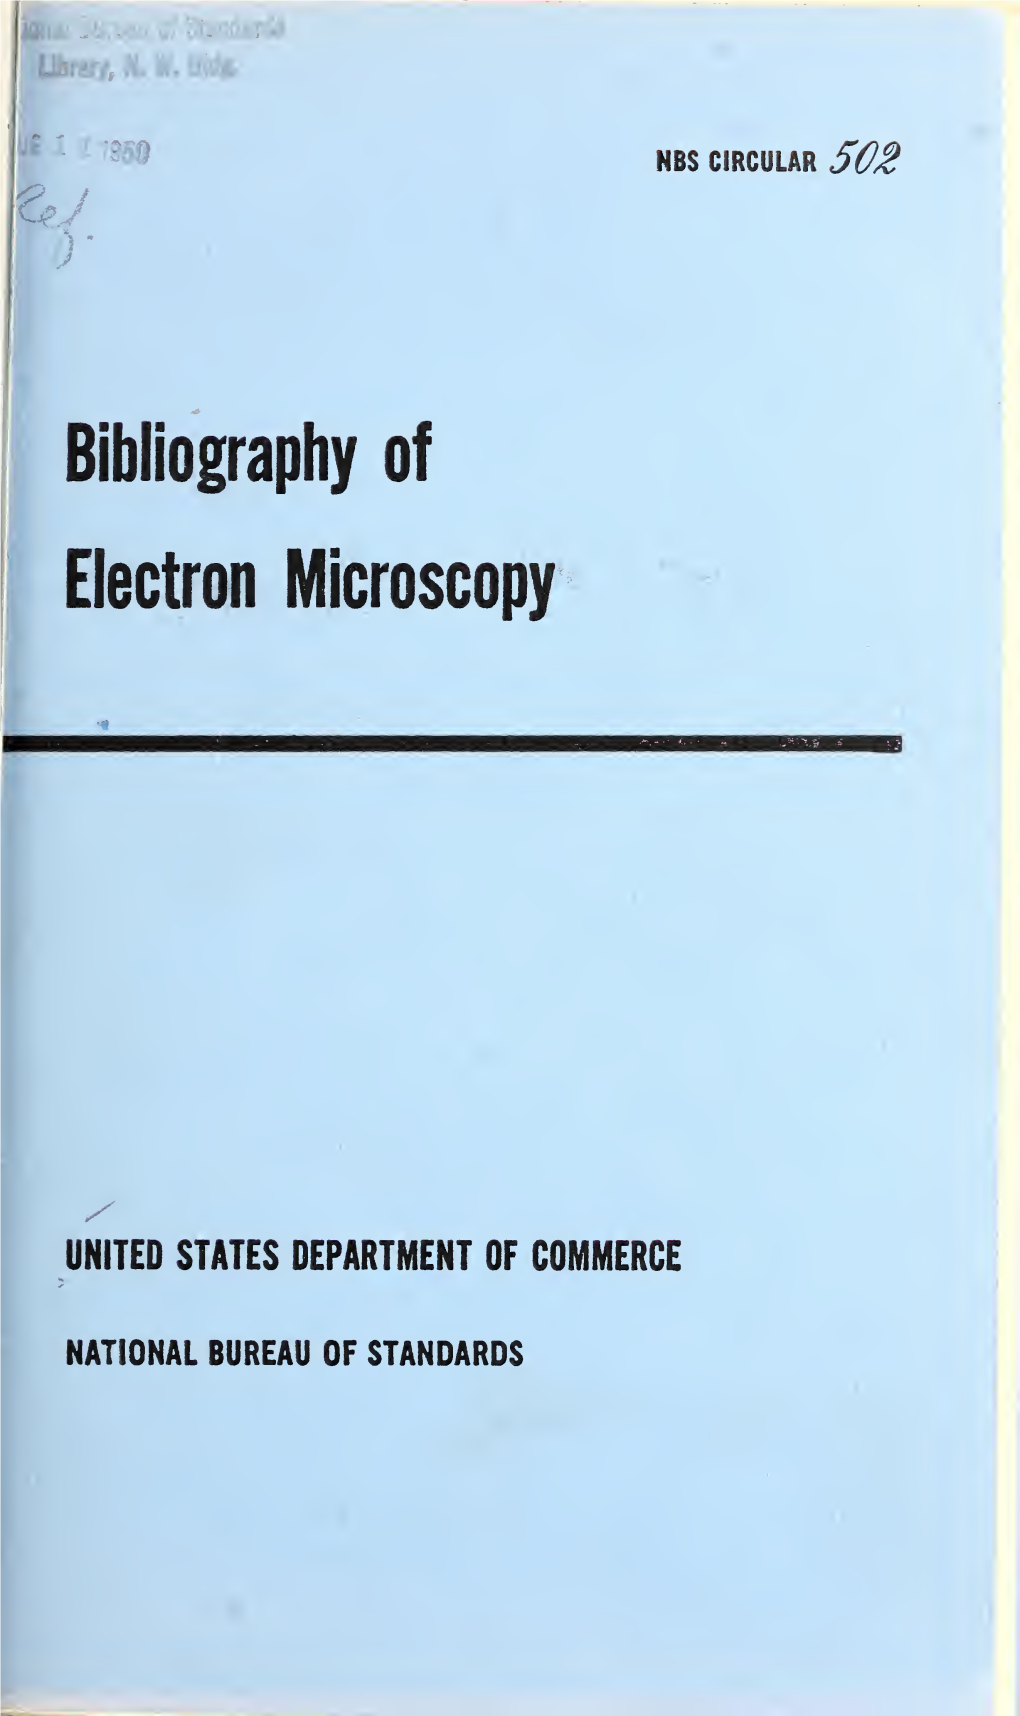 Circular of the Bureau of Standards No. 502: Bibliography of Electron